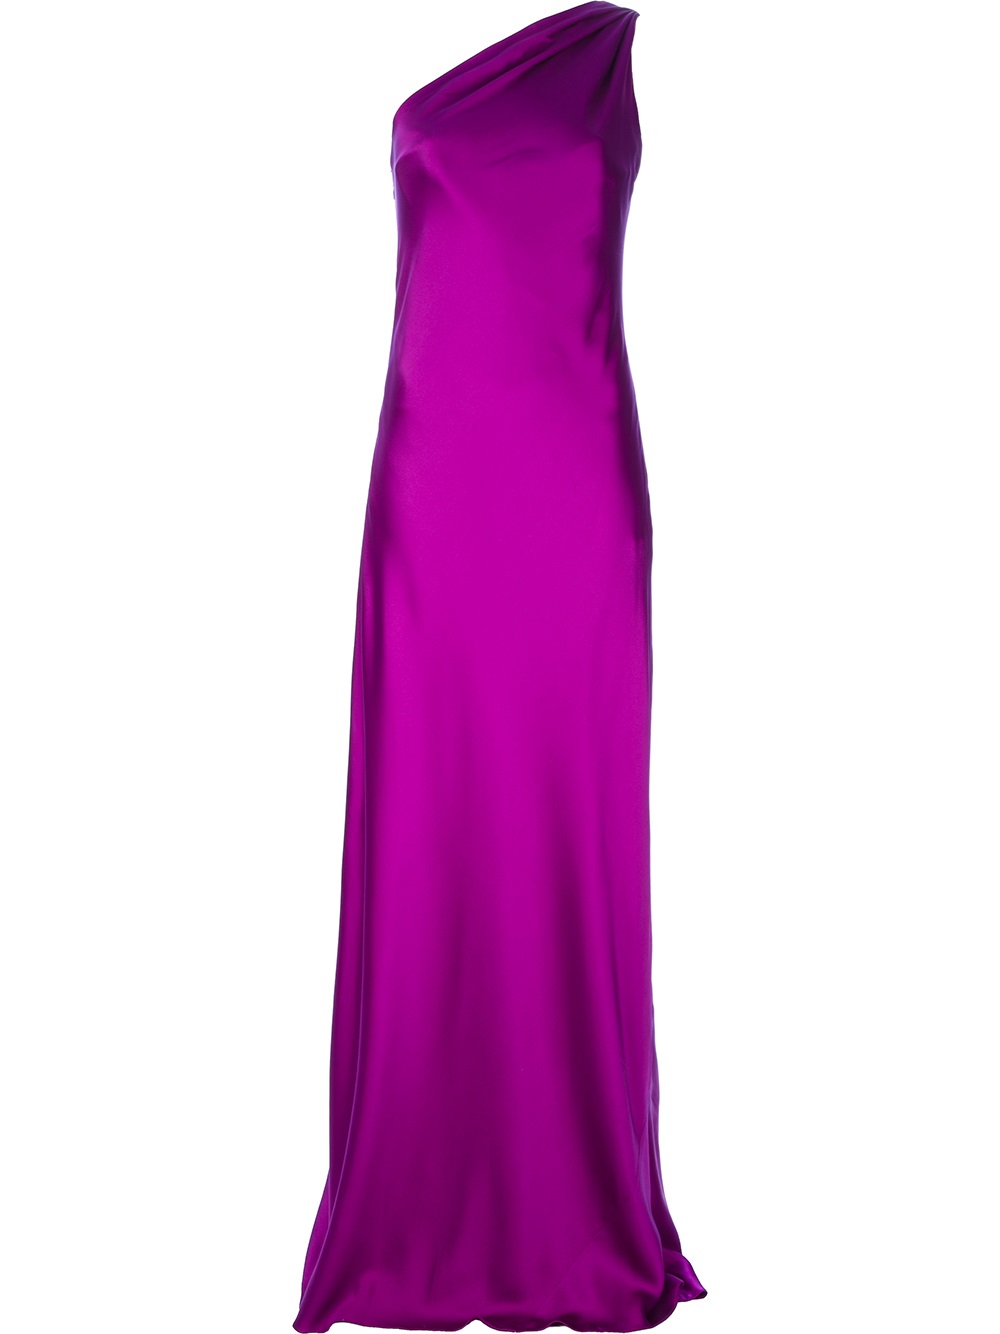 Ralph Lauren One Shoulder Gown in Fuchsia (Purple) | Lyst